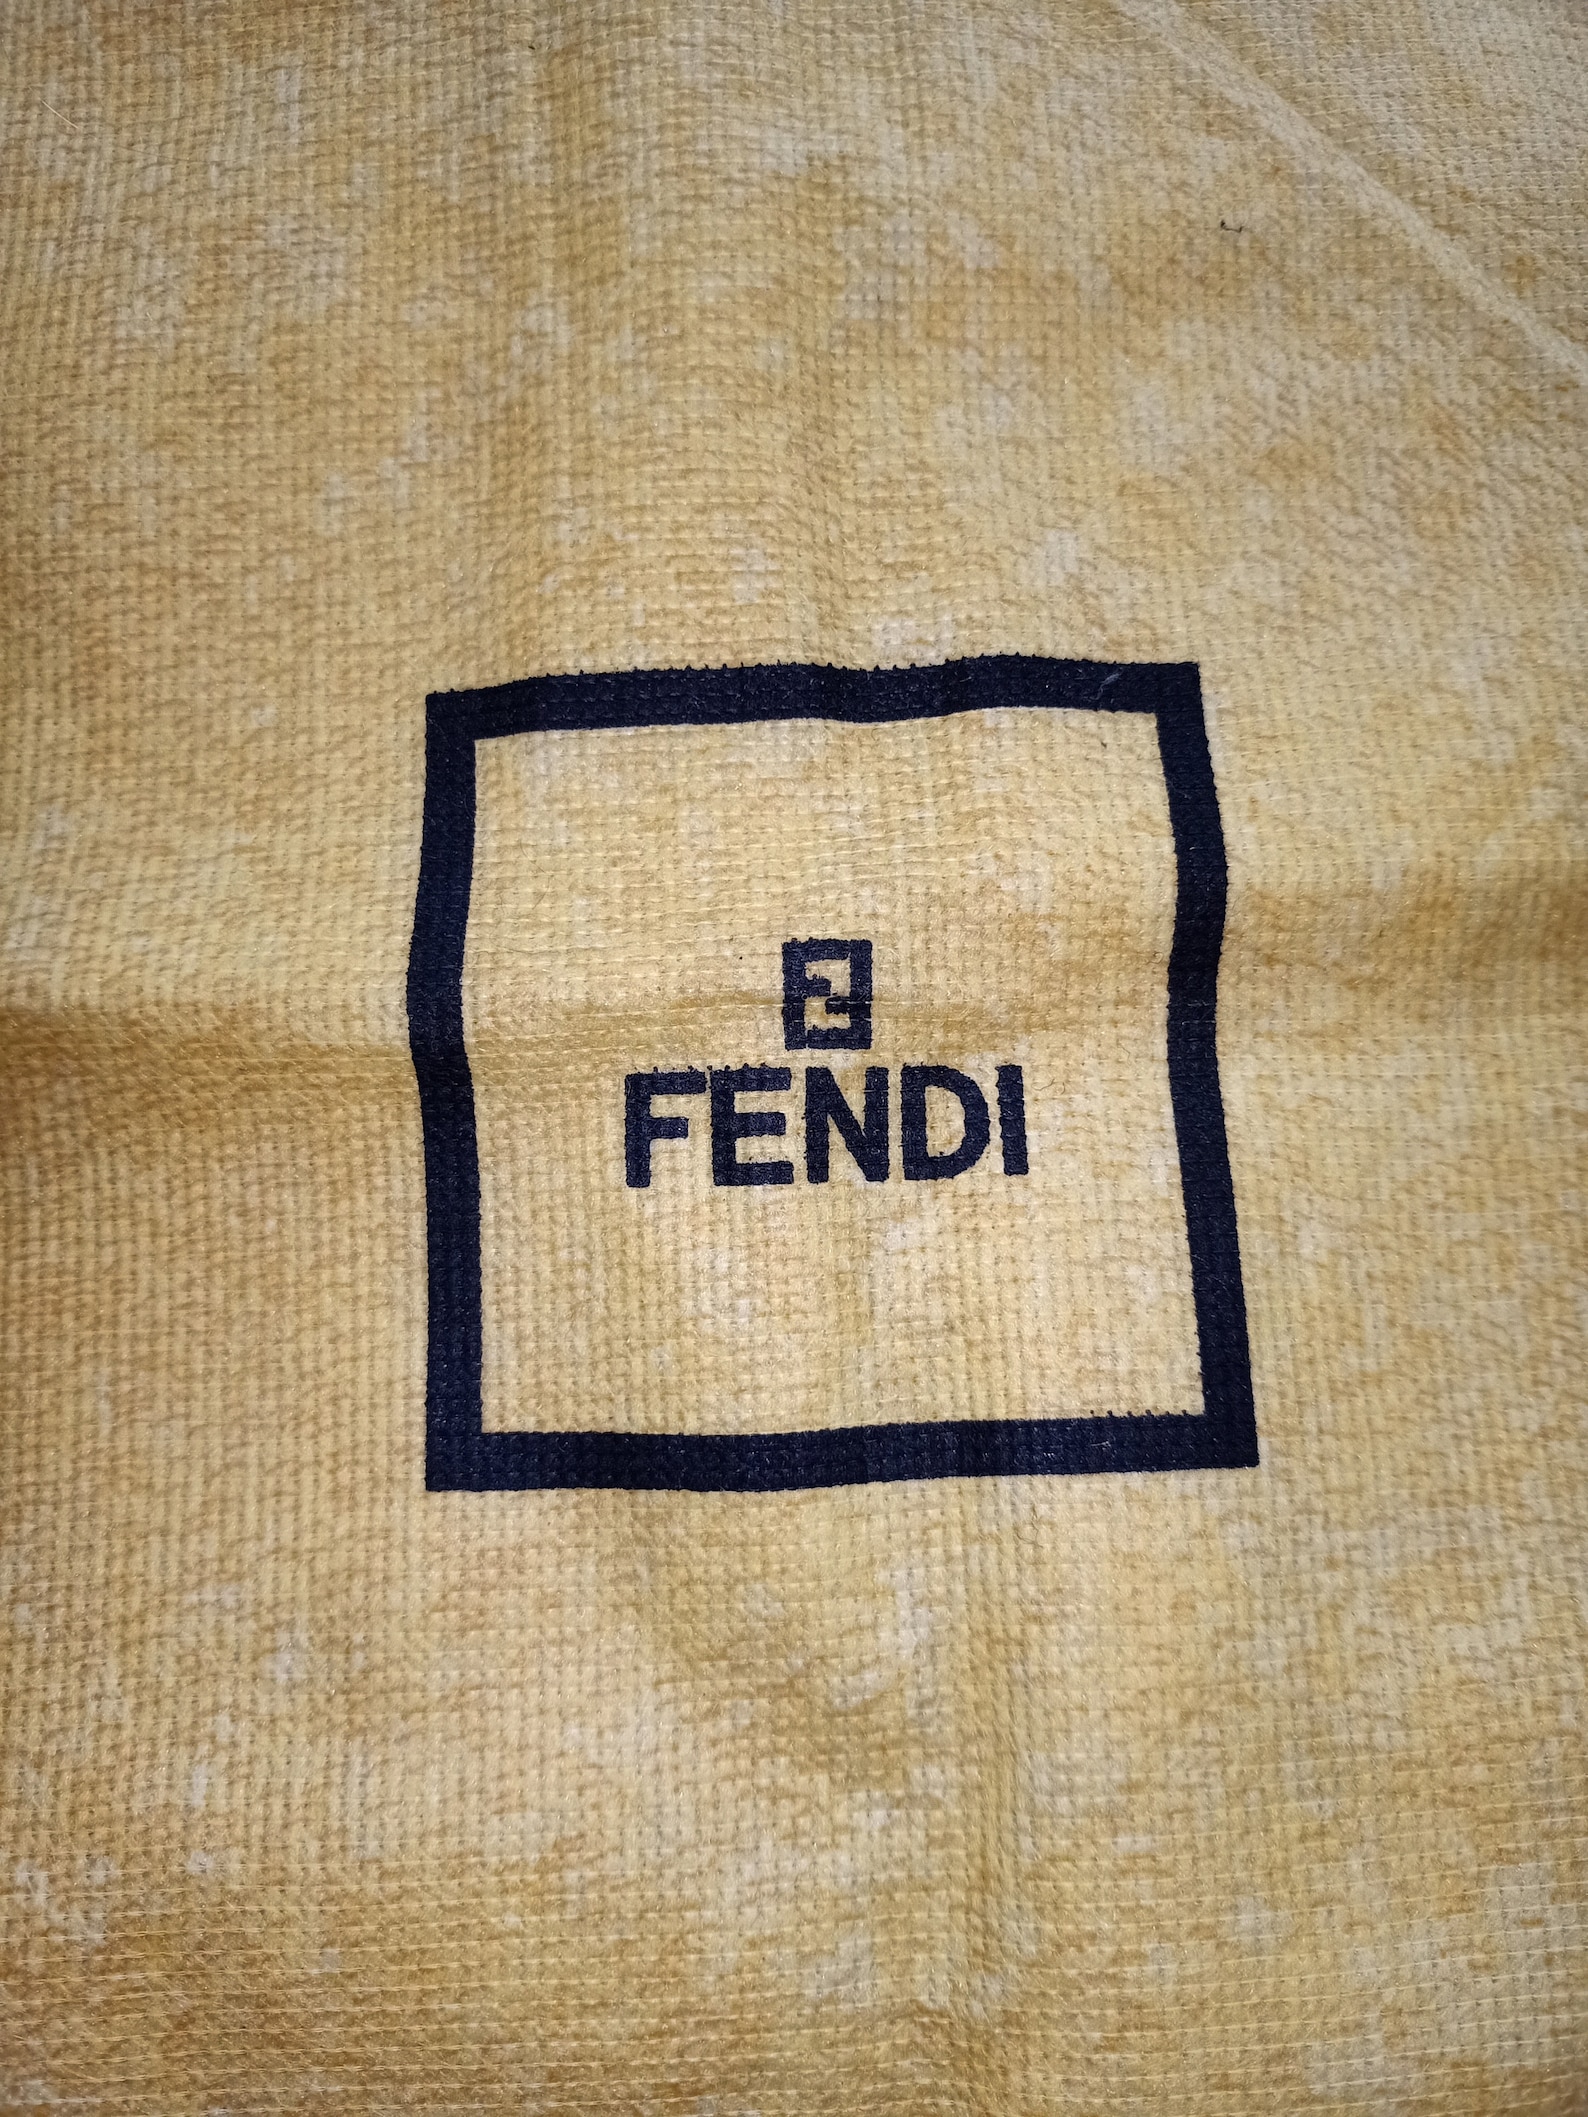 FENDI vintage Authentic Fendi Dust Bag 4649 cm Large Fendi | Etsy